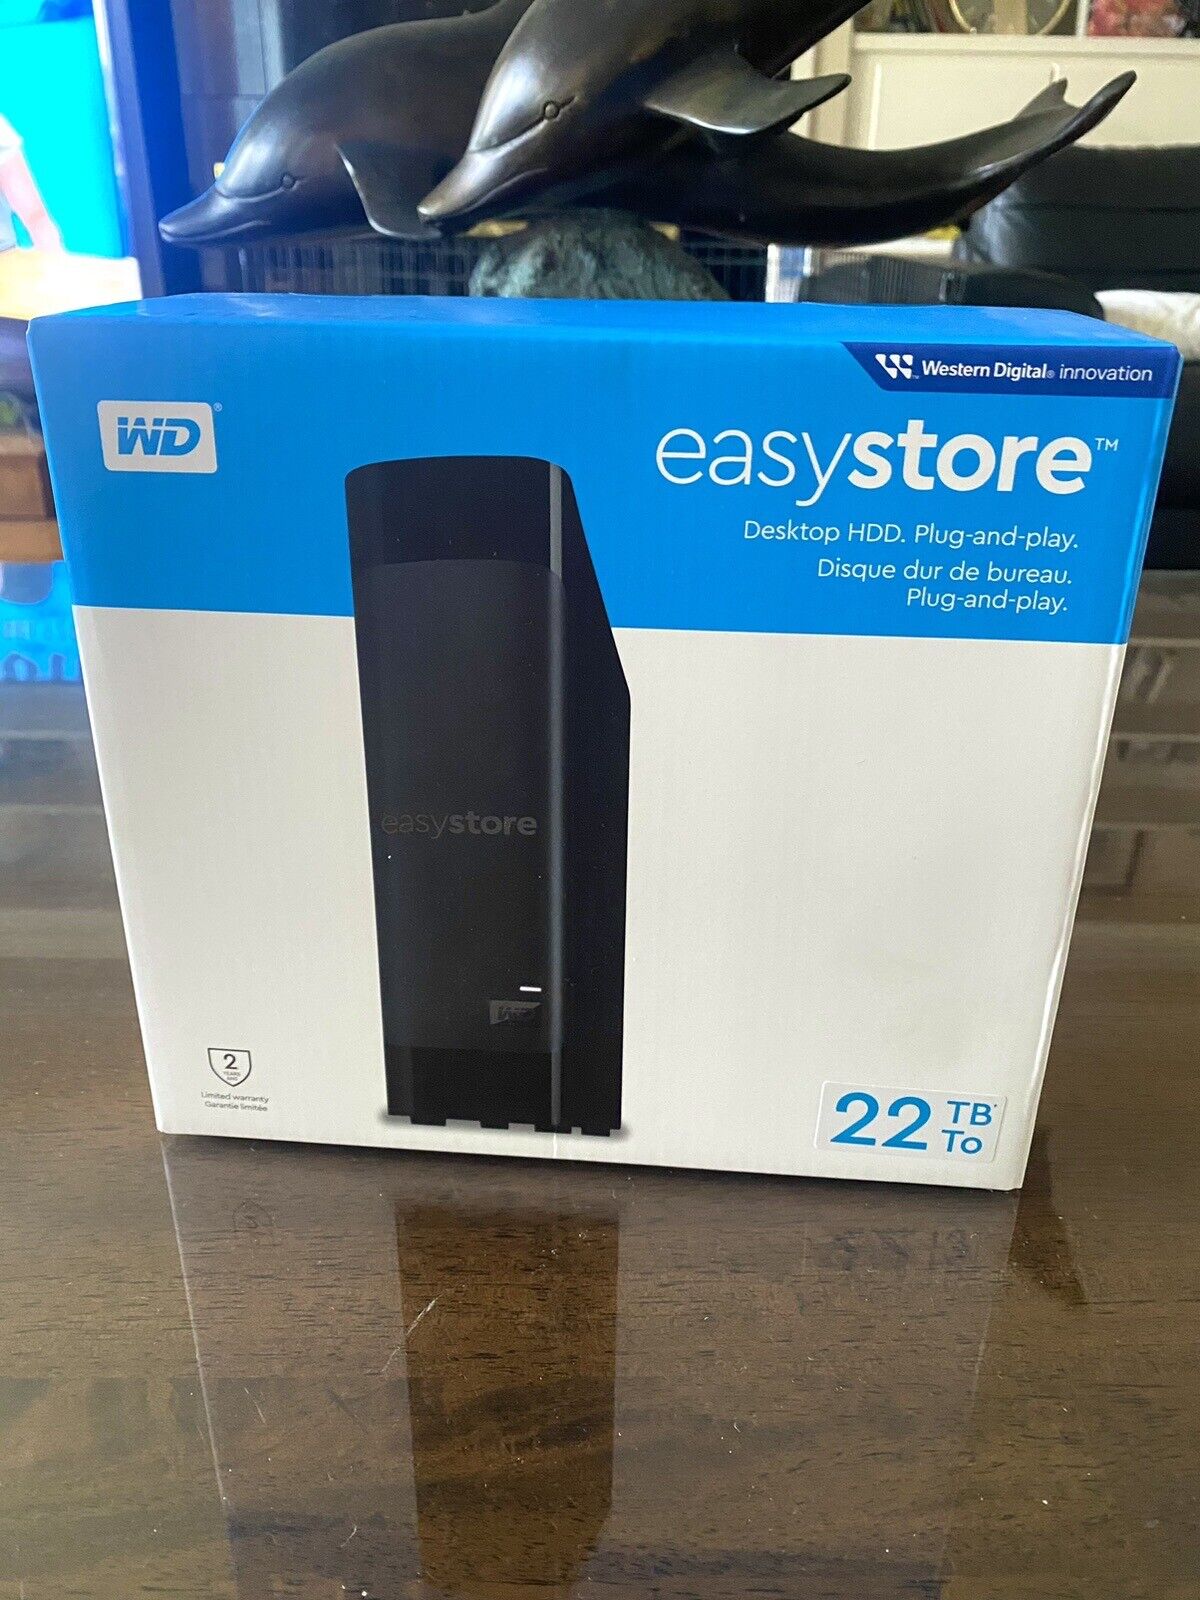 Brand New - WD - EasyStore 22TB External USB 3.0 Hard Drive - Black - Sealed